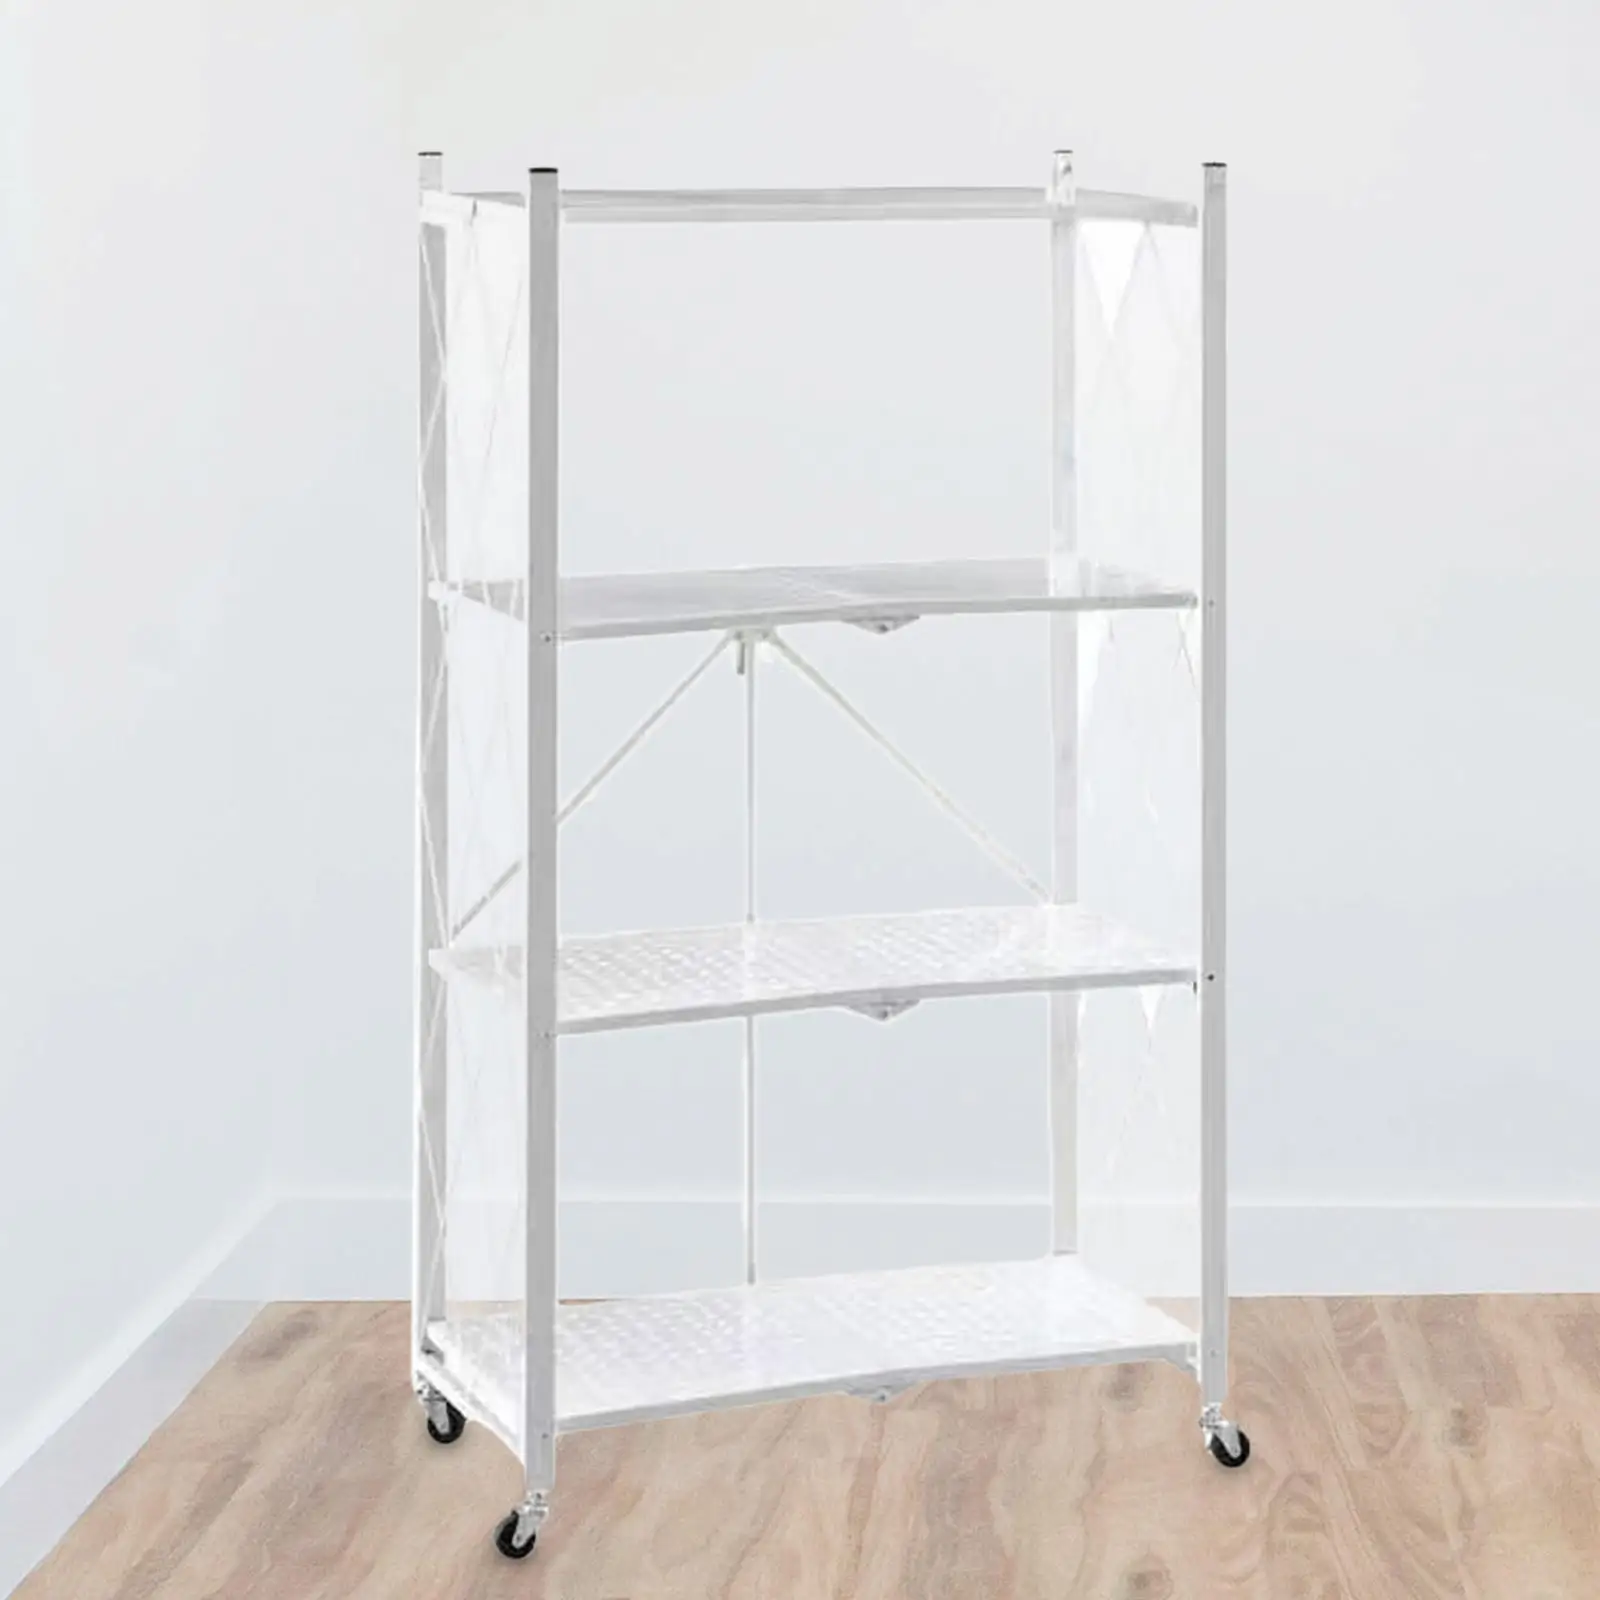 Foldable Bookshelf Free Standing Holder Book Case Corner Shelf Utensils Rack Rolling Storage Organizer for Bathroom Home Office